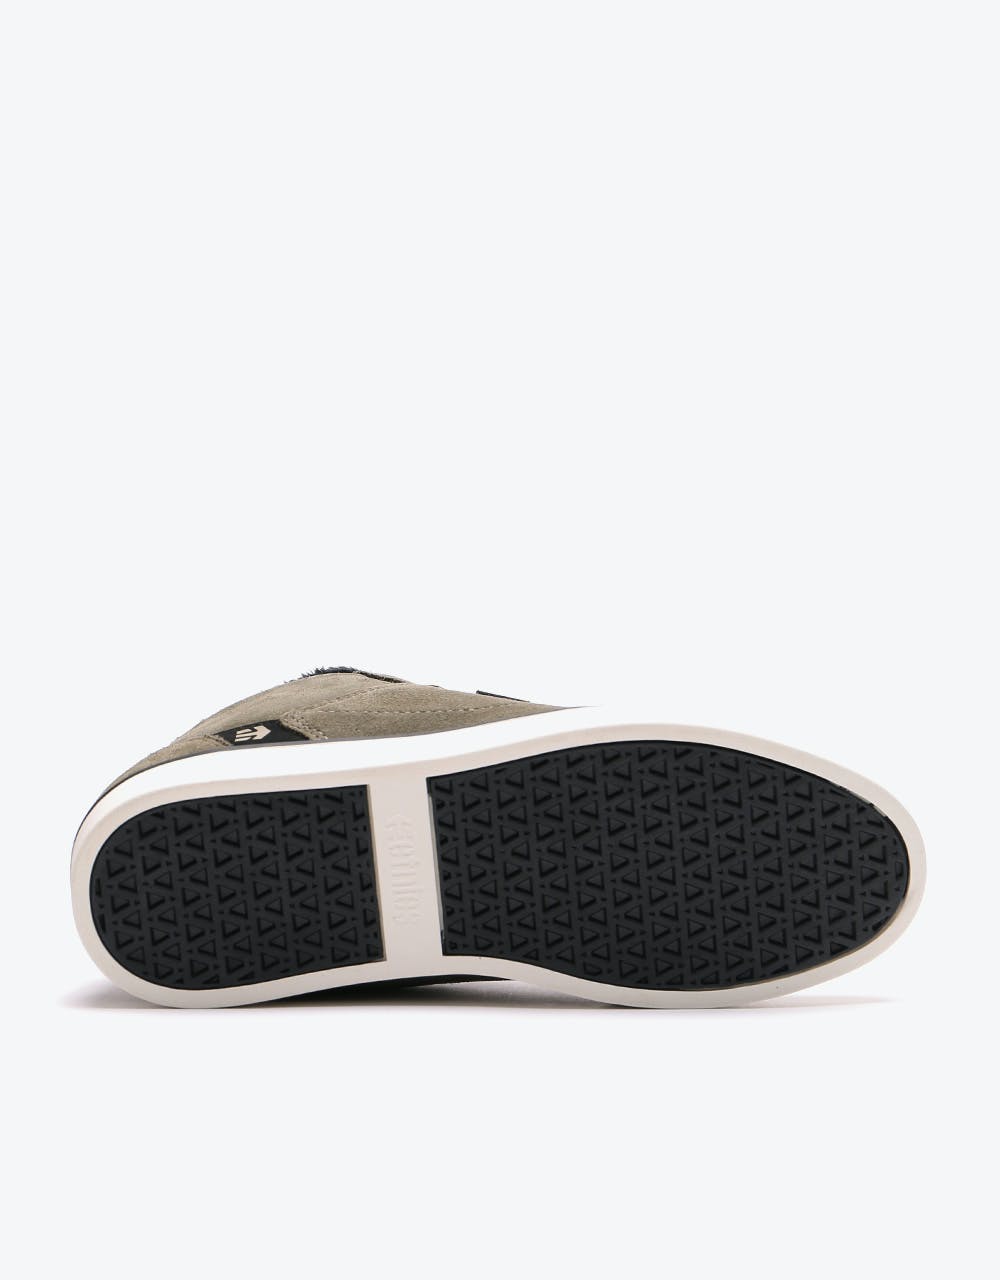 Etnies Jefferson Mid Skate Shoes - Olive/Black